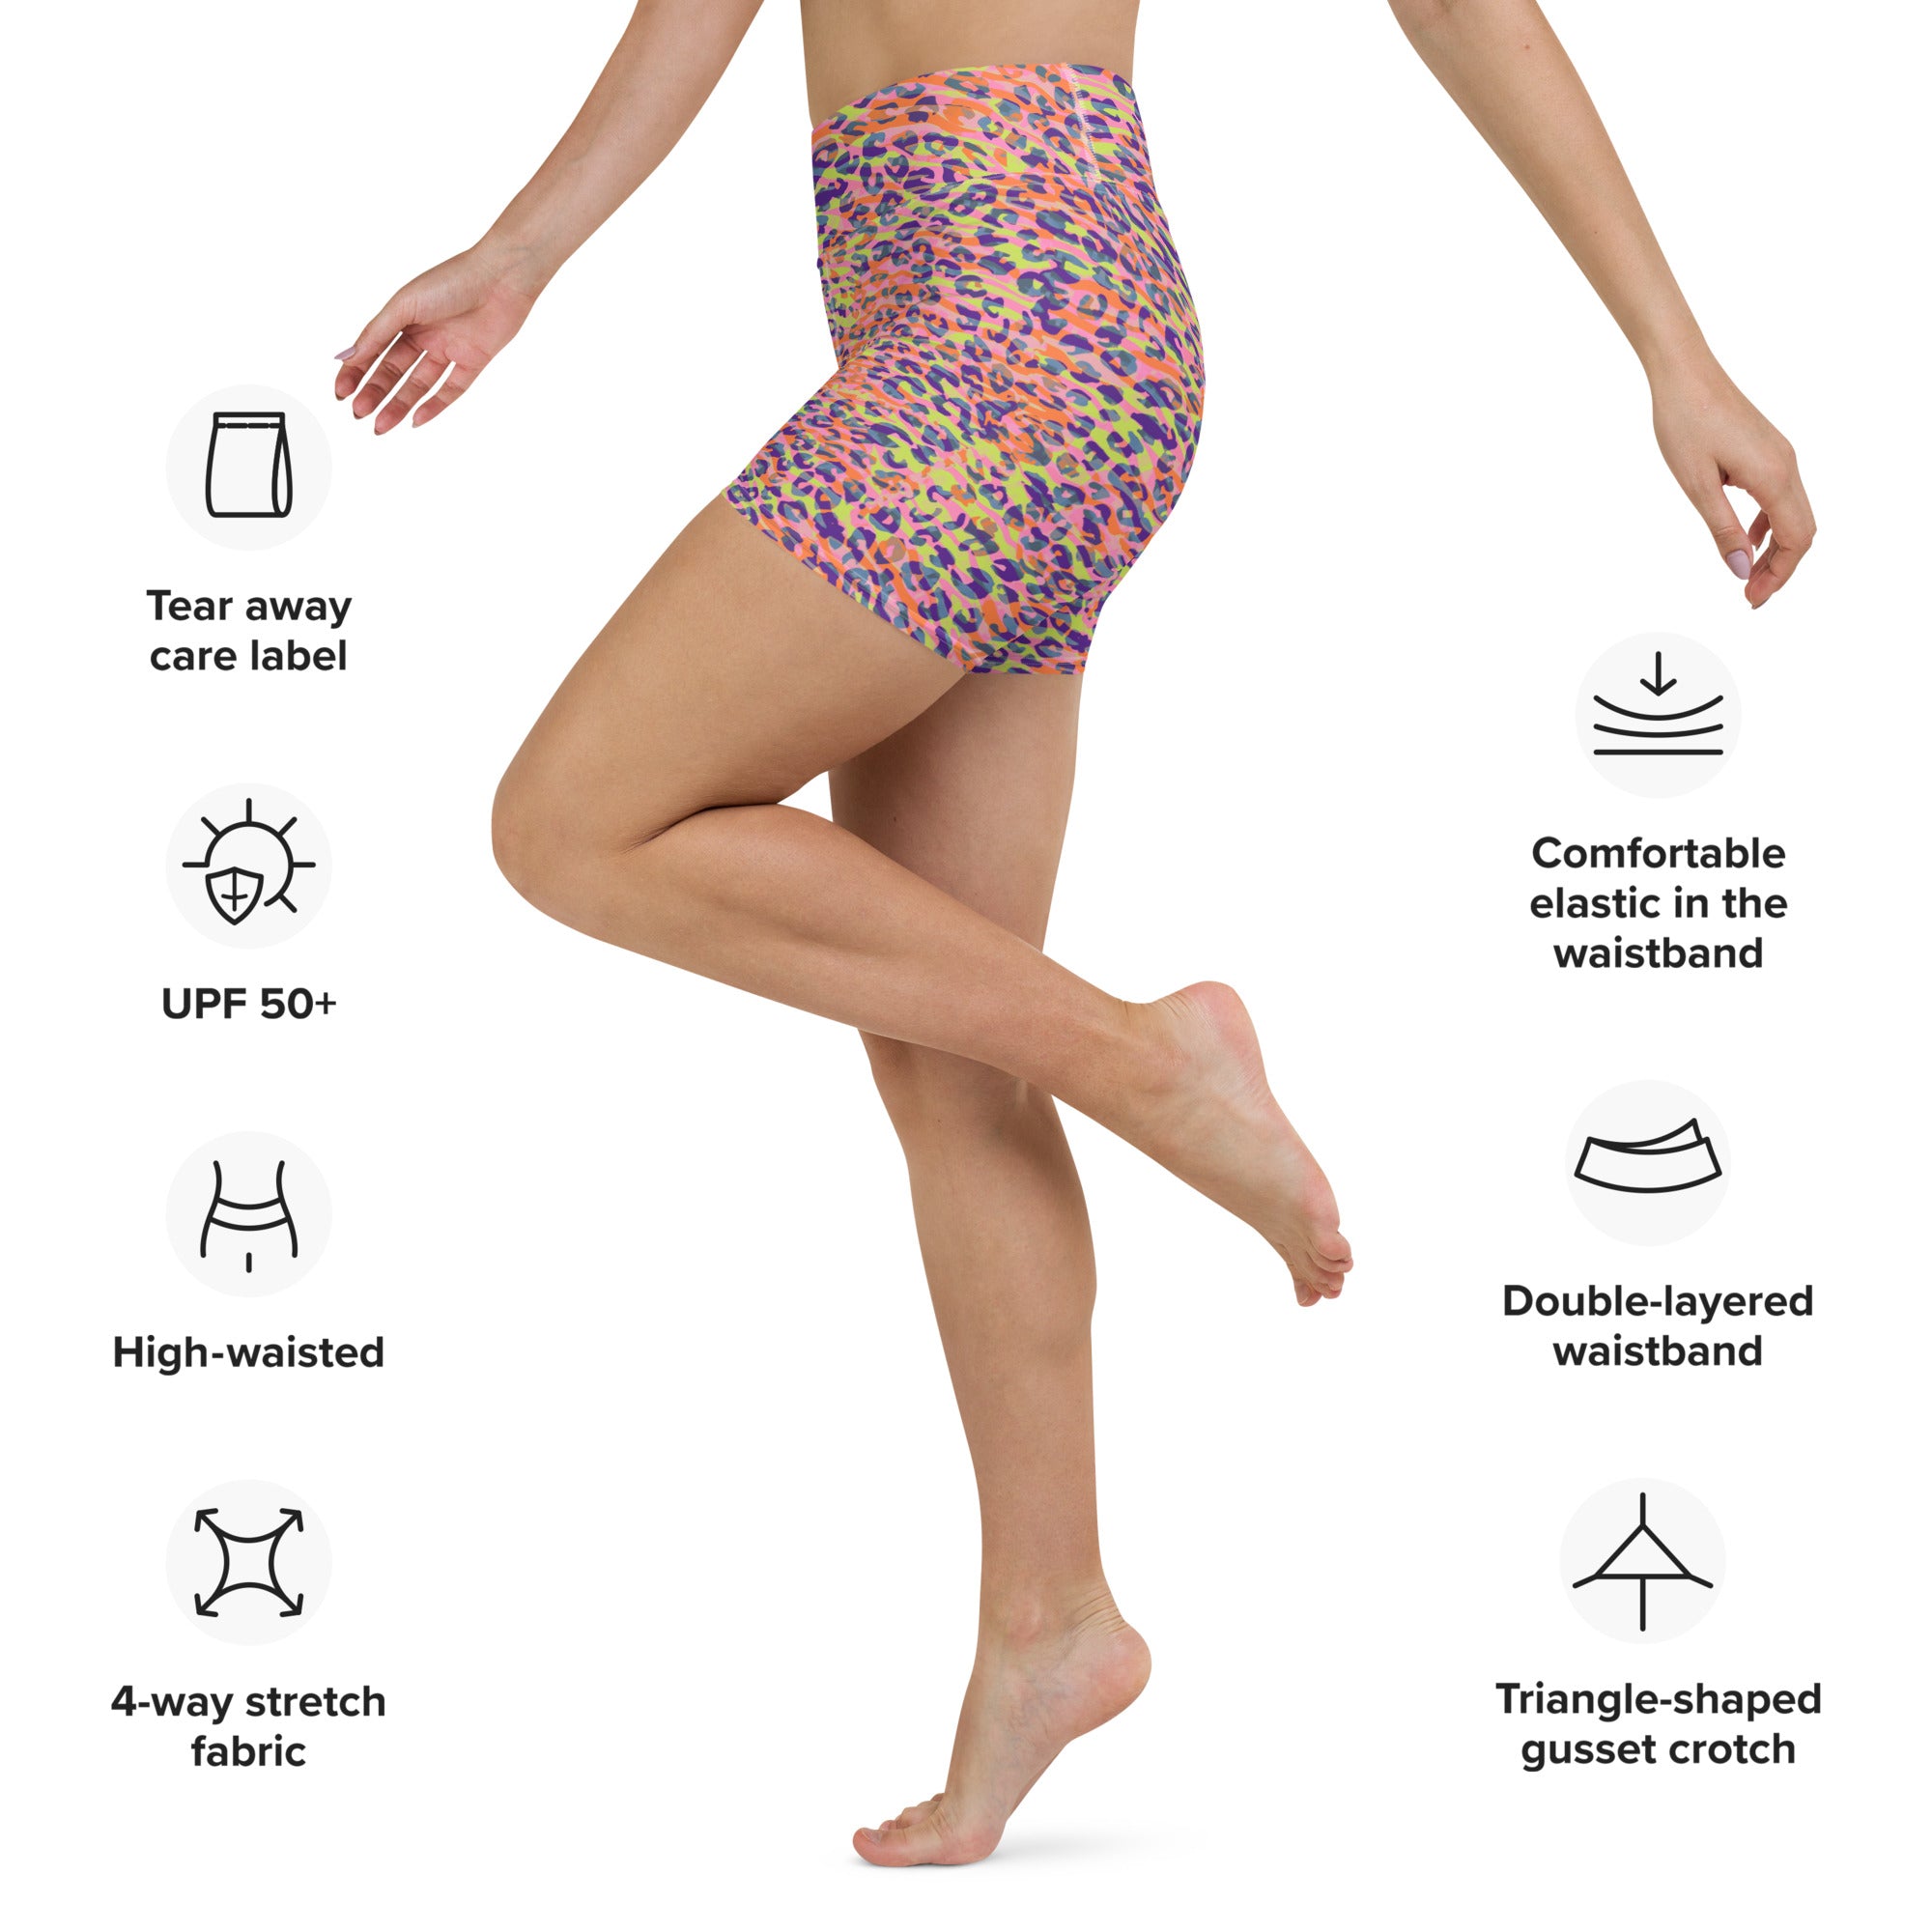 Yoga Shorts- ZEBRA AND LEOPARD PRINT ORANGE WITH YELLOW